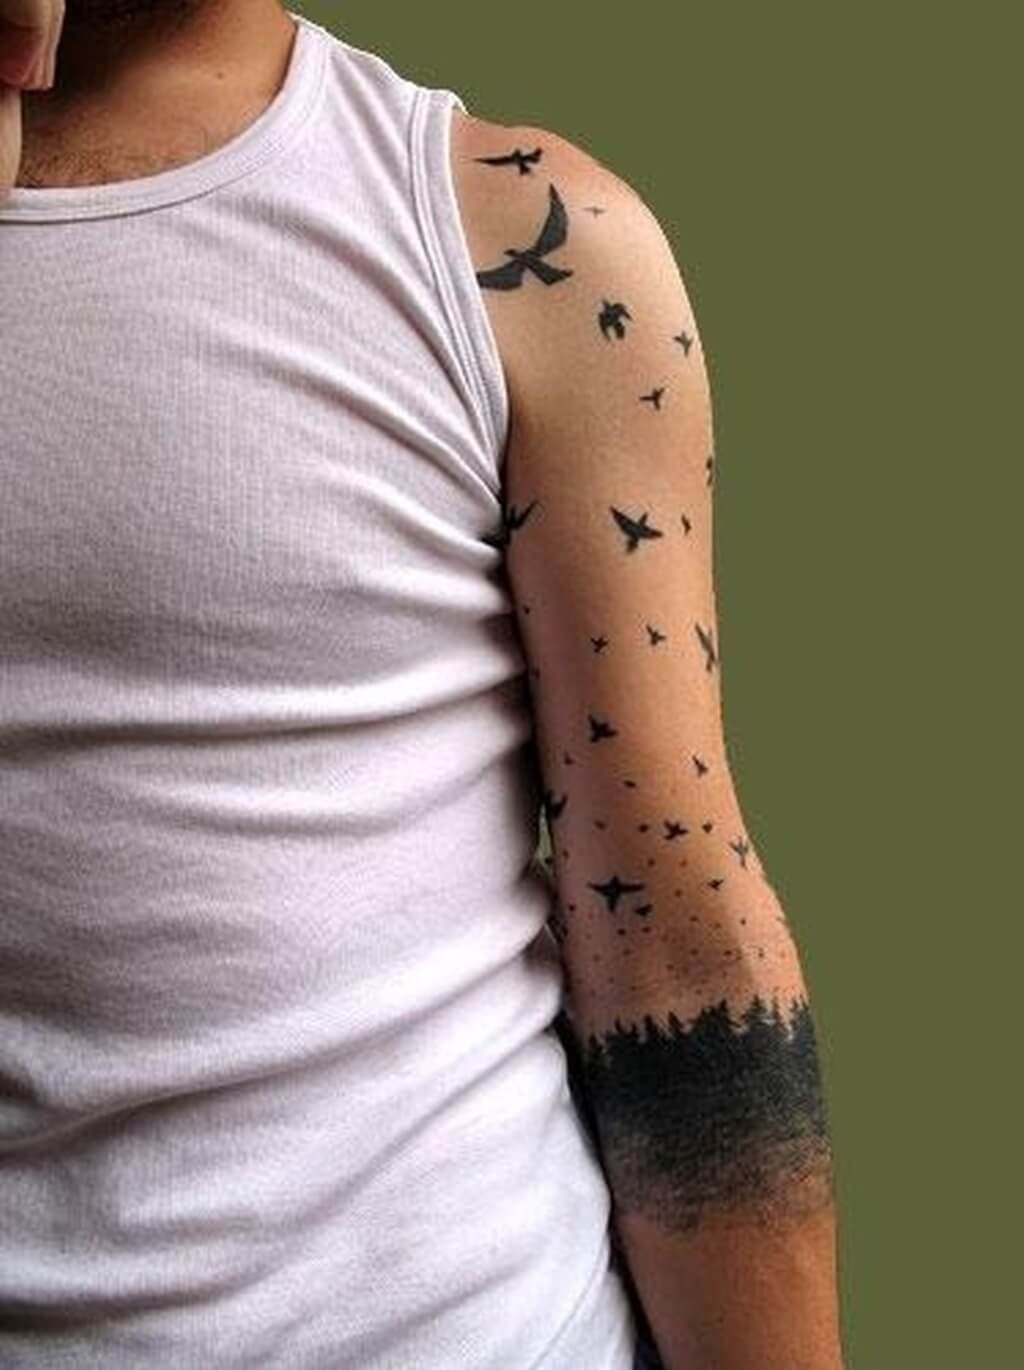 girly half sleeve tattoo ideas for females